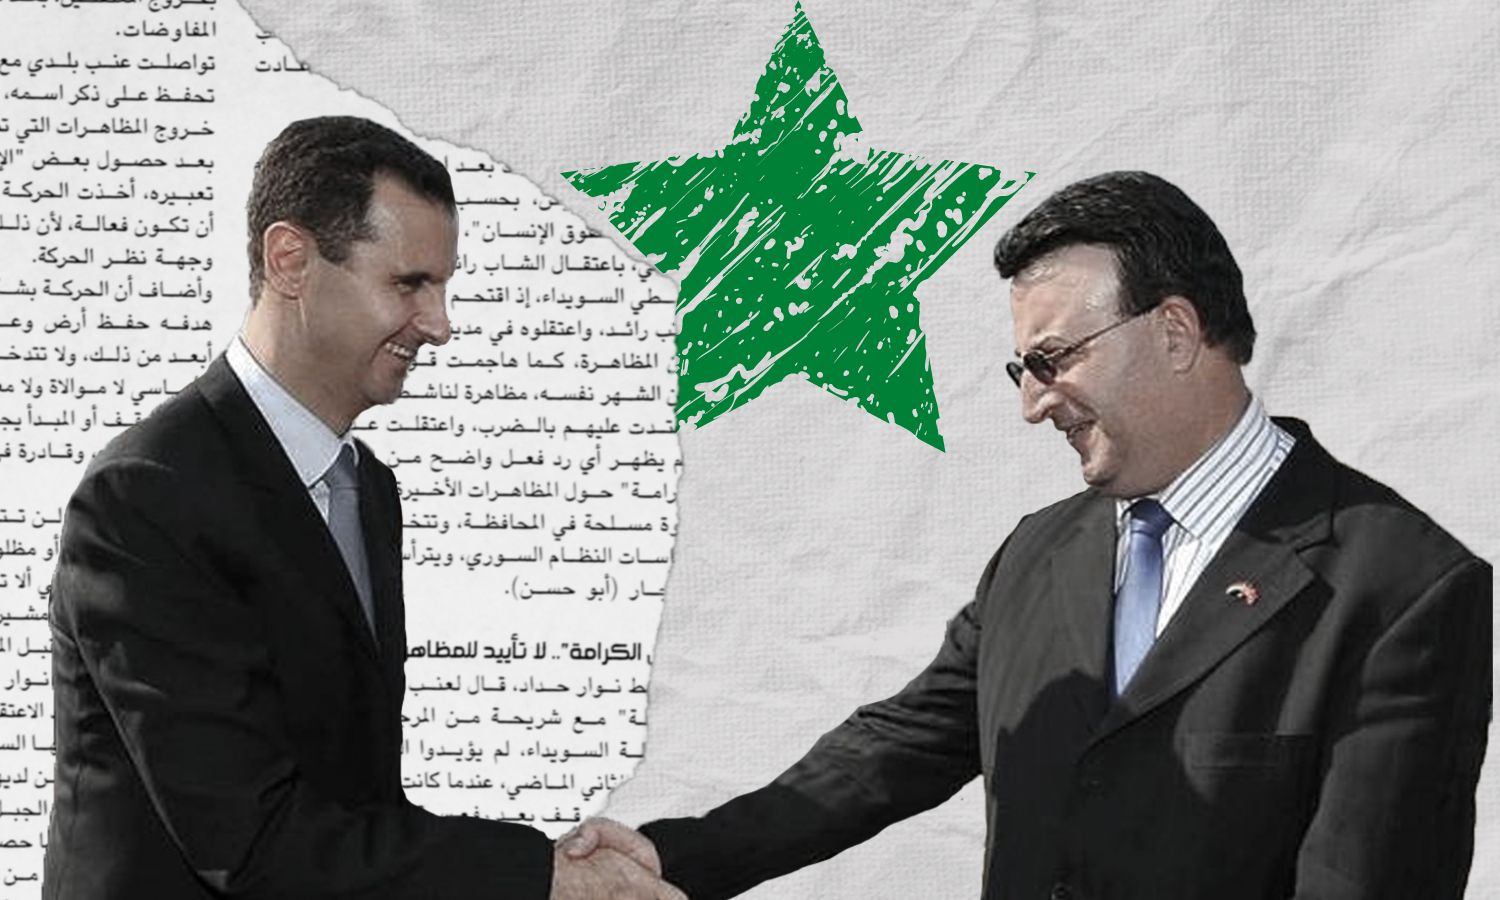 The former Syrian ambassador to Turkey, Nidal Kabalan, with the president of the Syrian regime, Bashar al-Assad (edited by Enab Baladi)